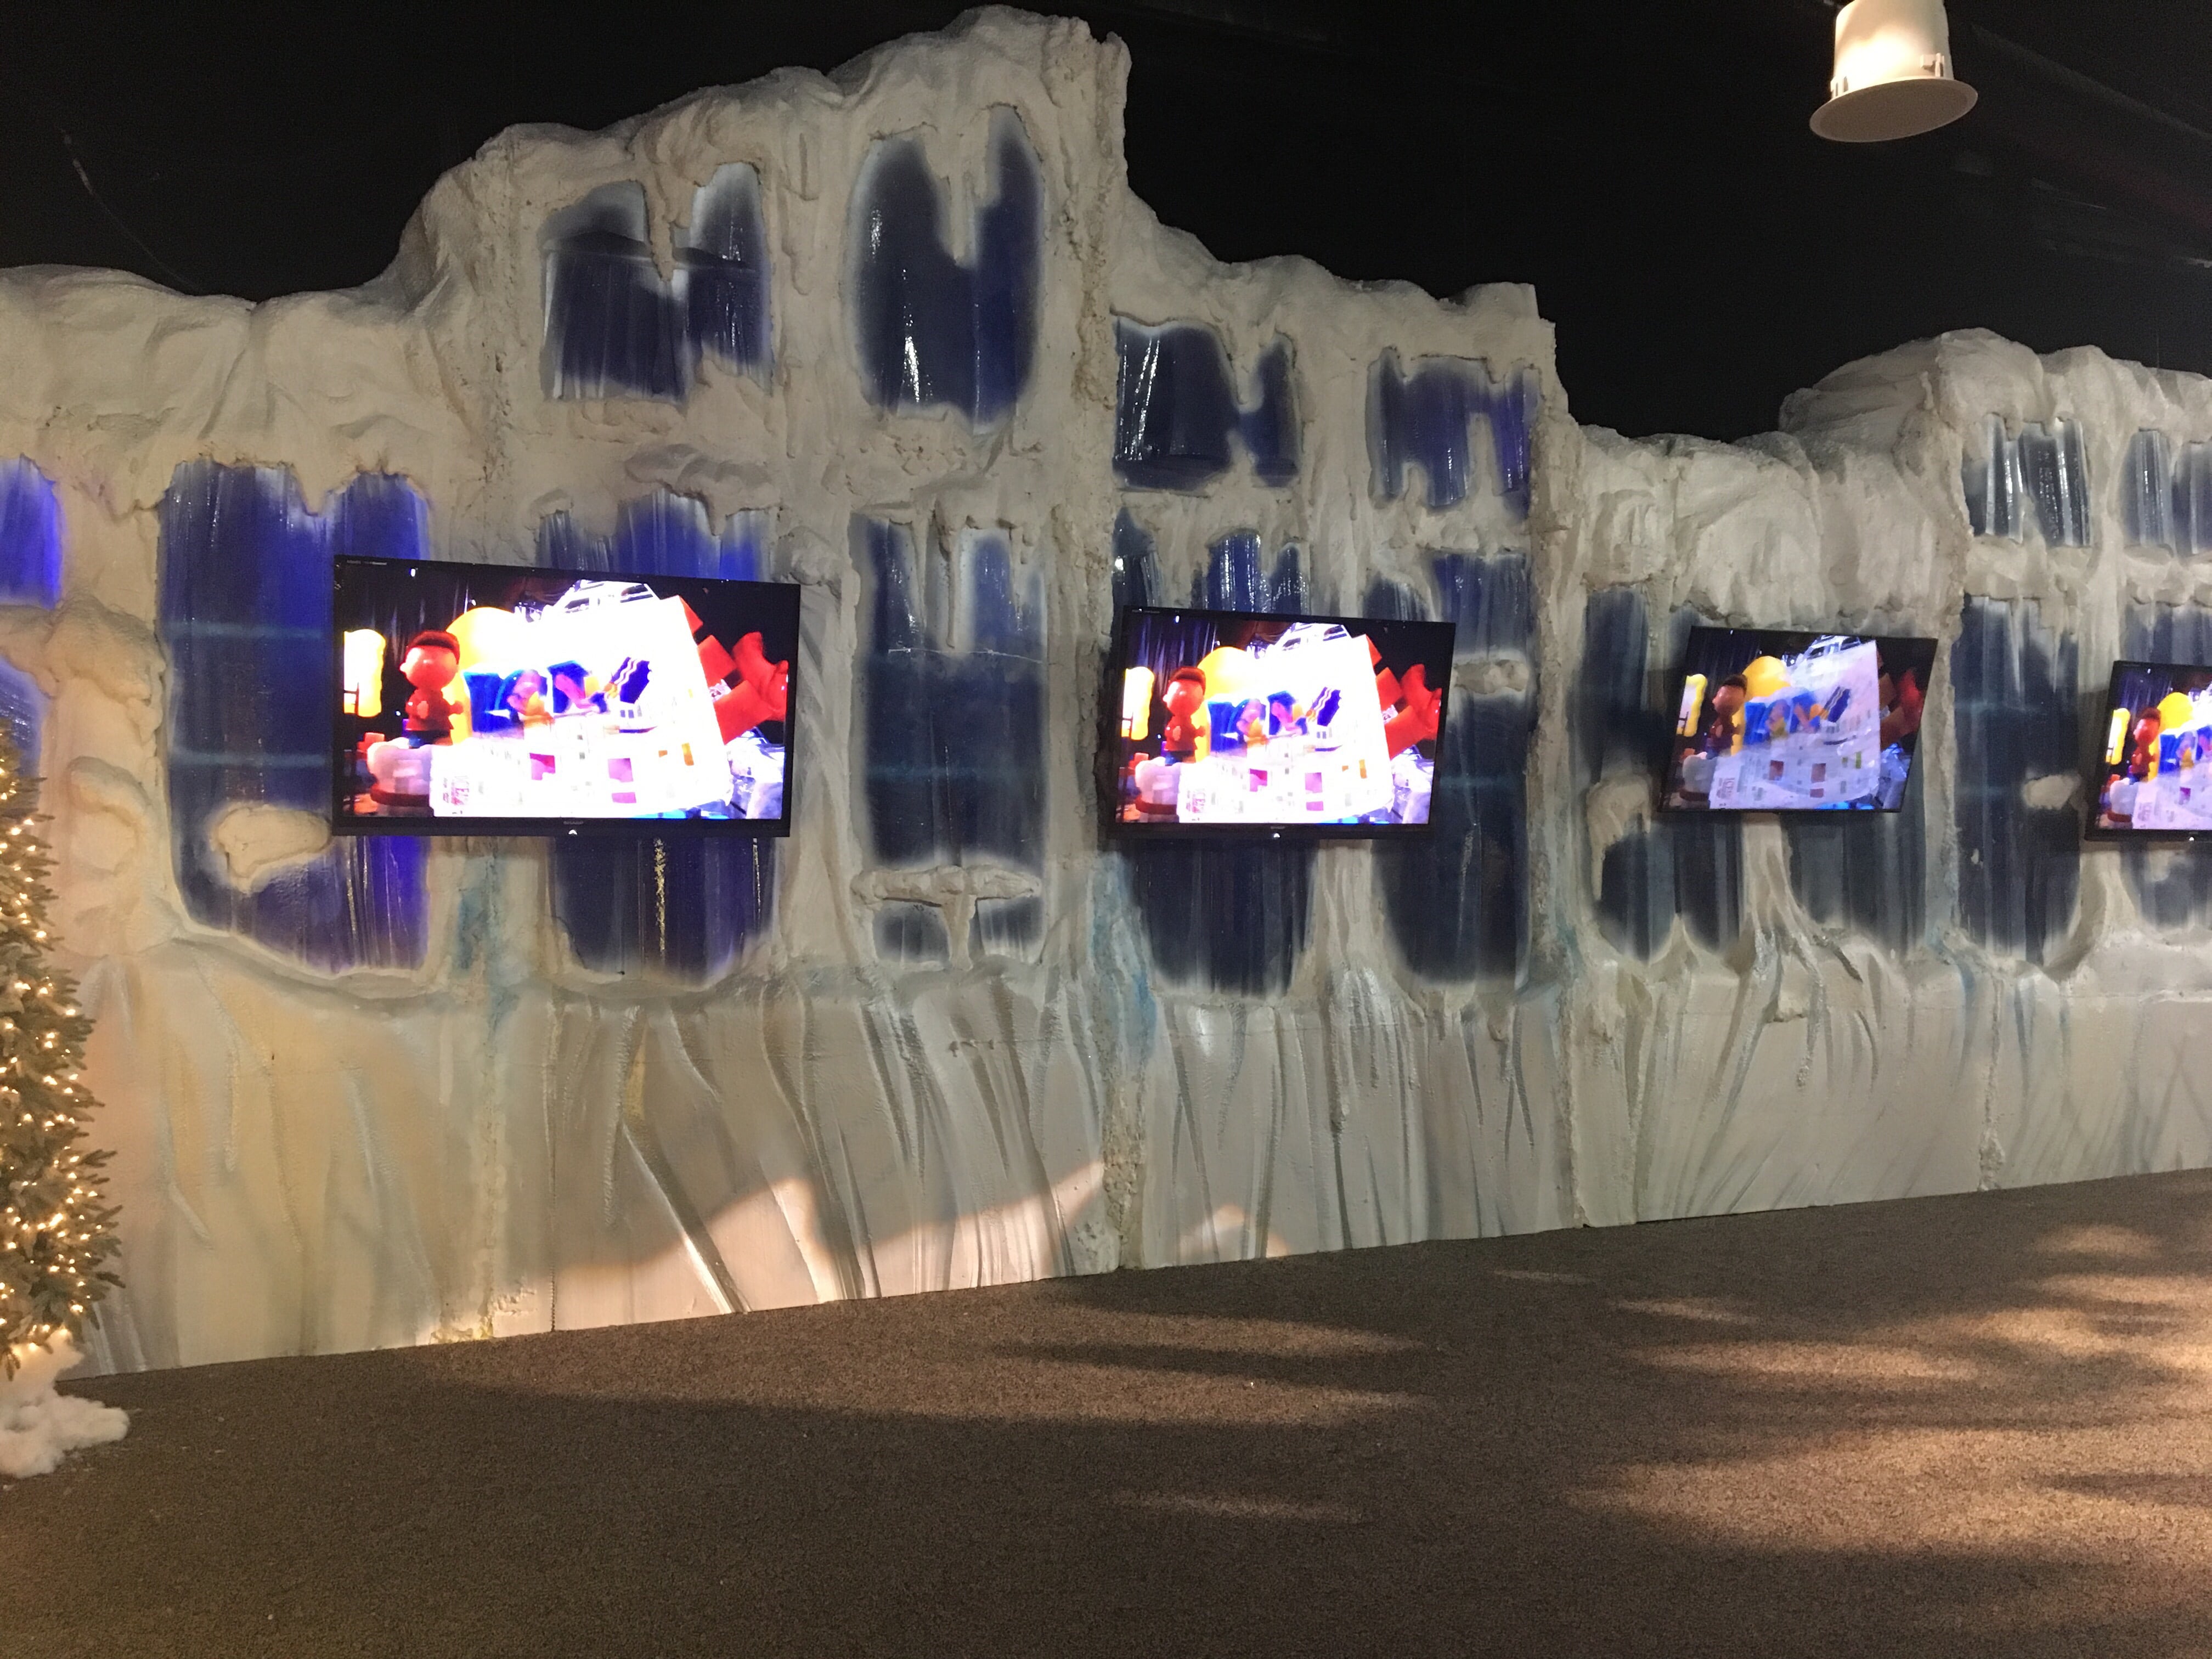 Nashville ICE exhibit